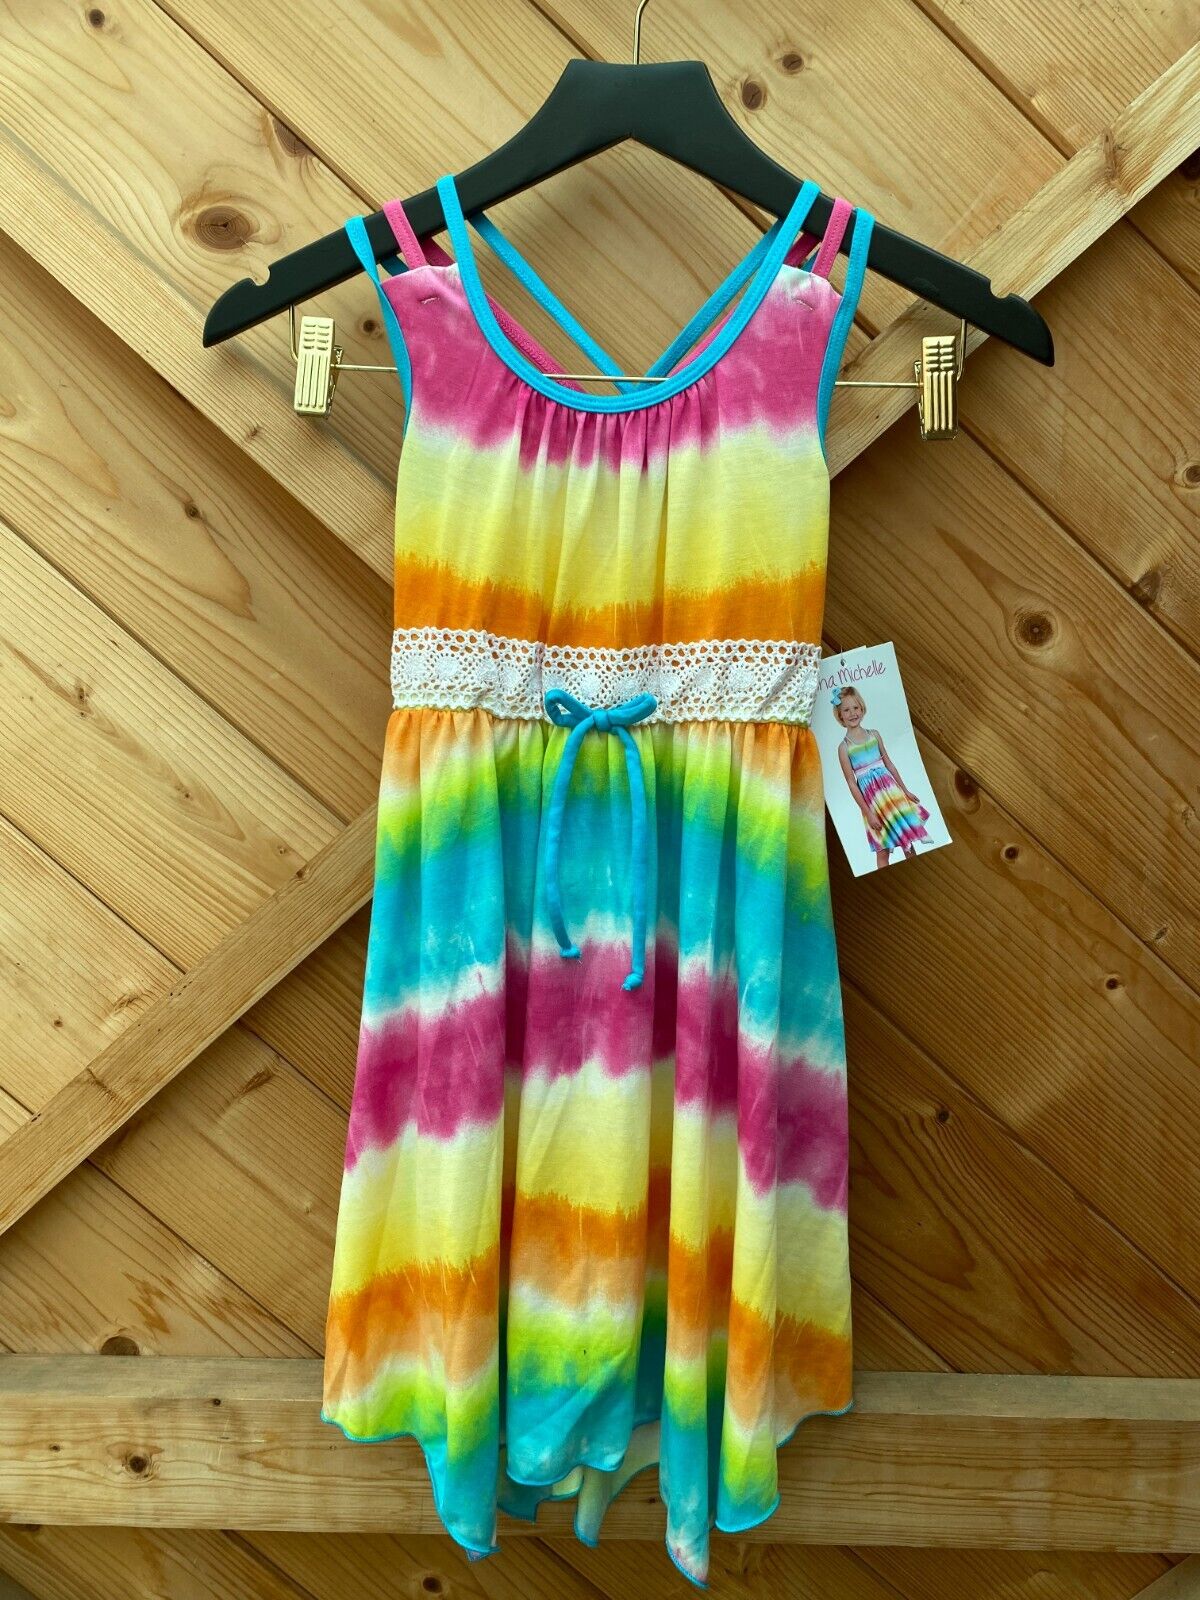 Jona Michelle Girls Sleeveless Casual Spring/Summer Dress